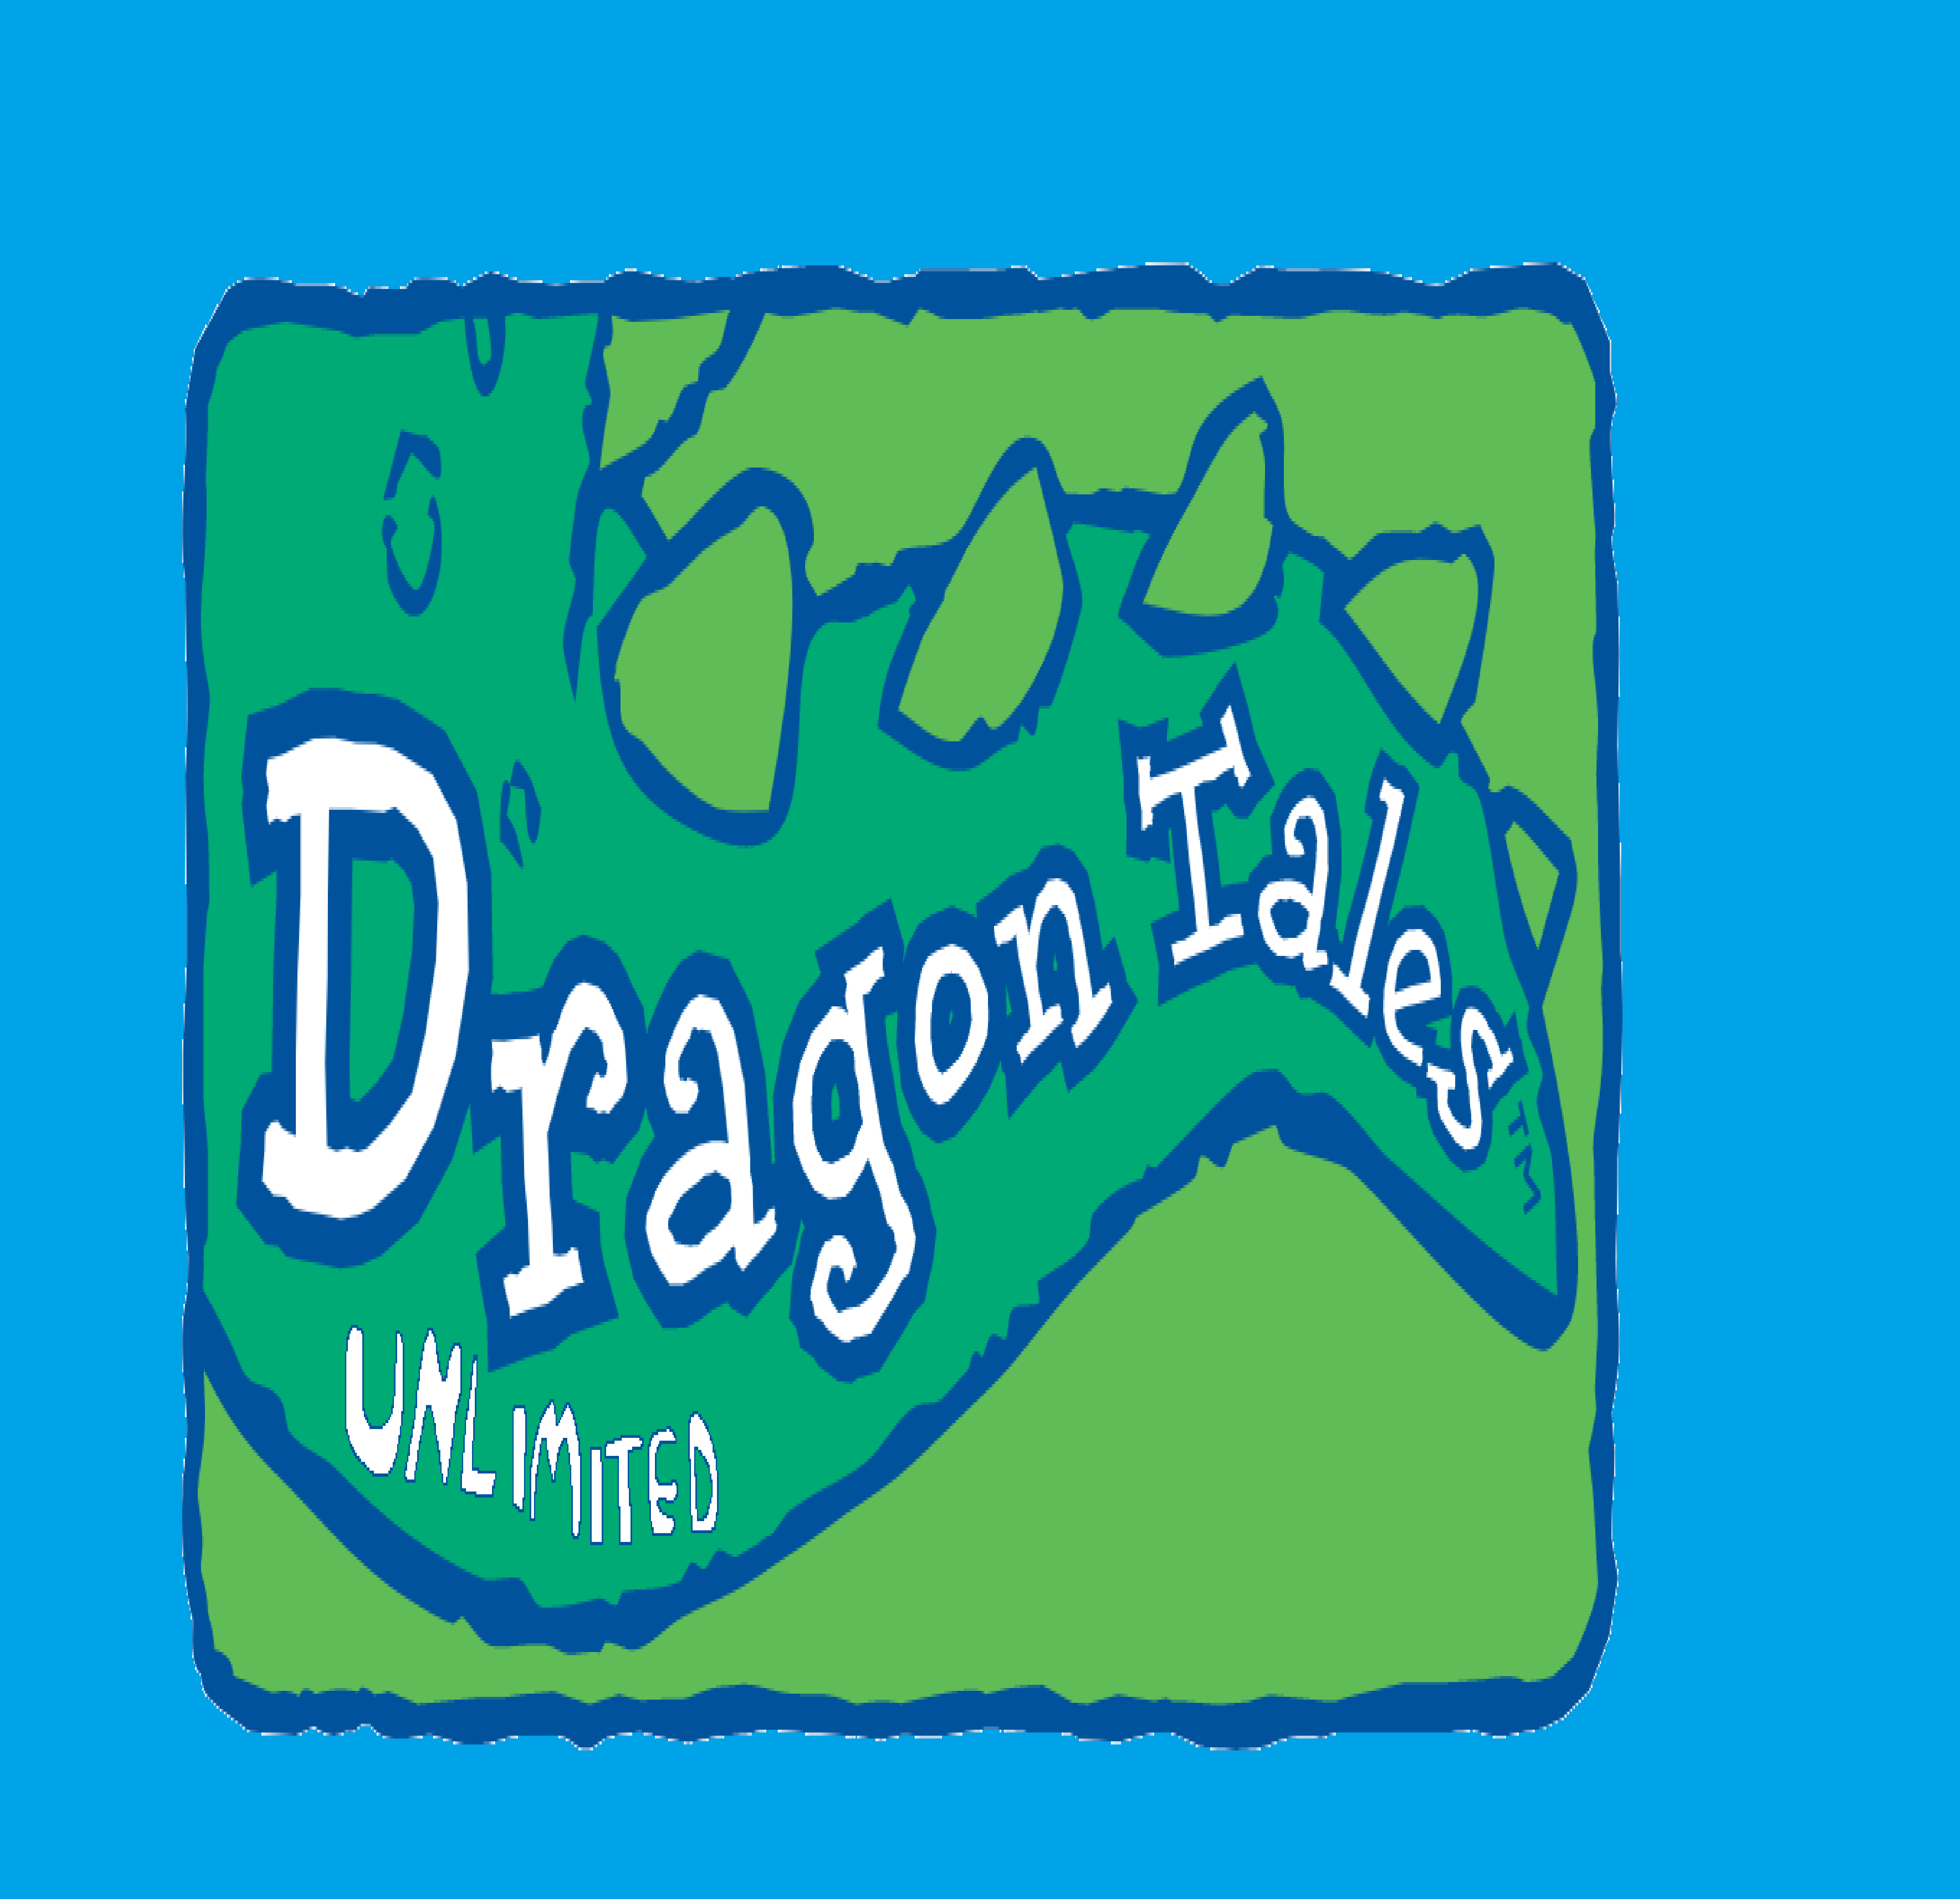 dragon tales logo